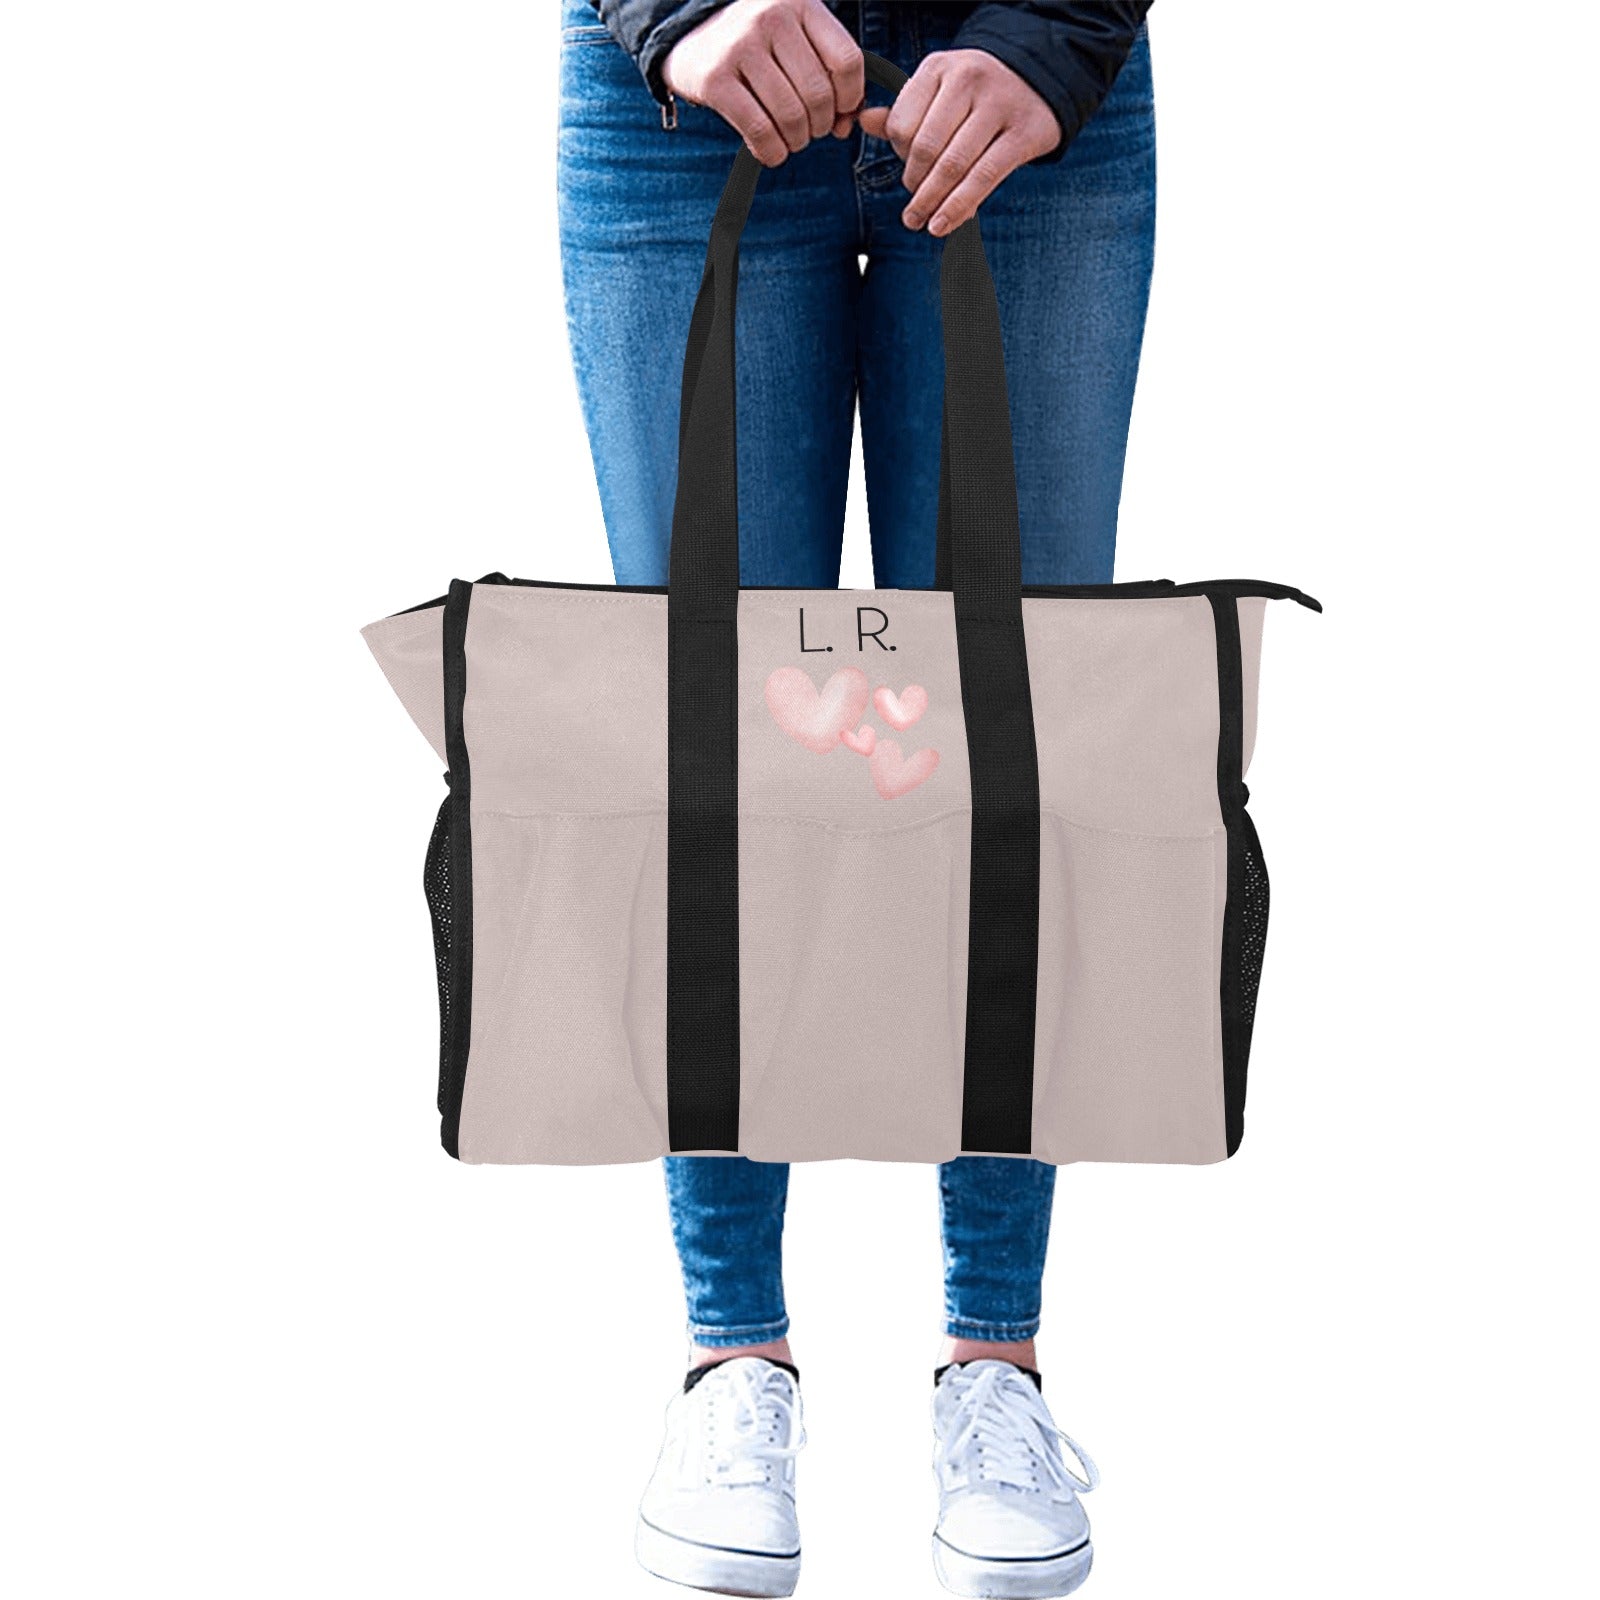 Customised & Personalised Travel Bag - Hospital to Baby Bag